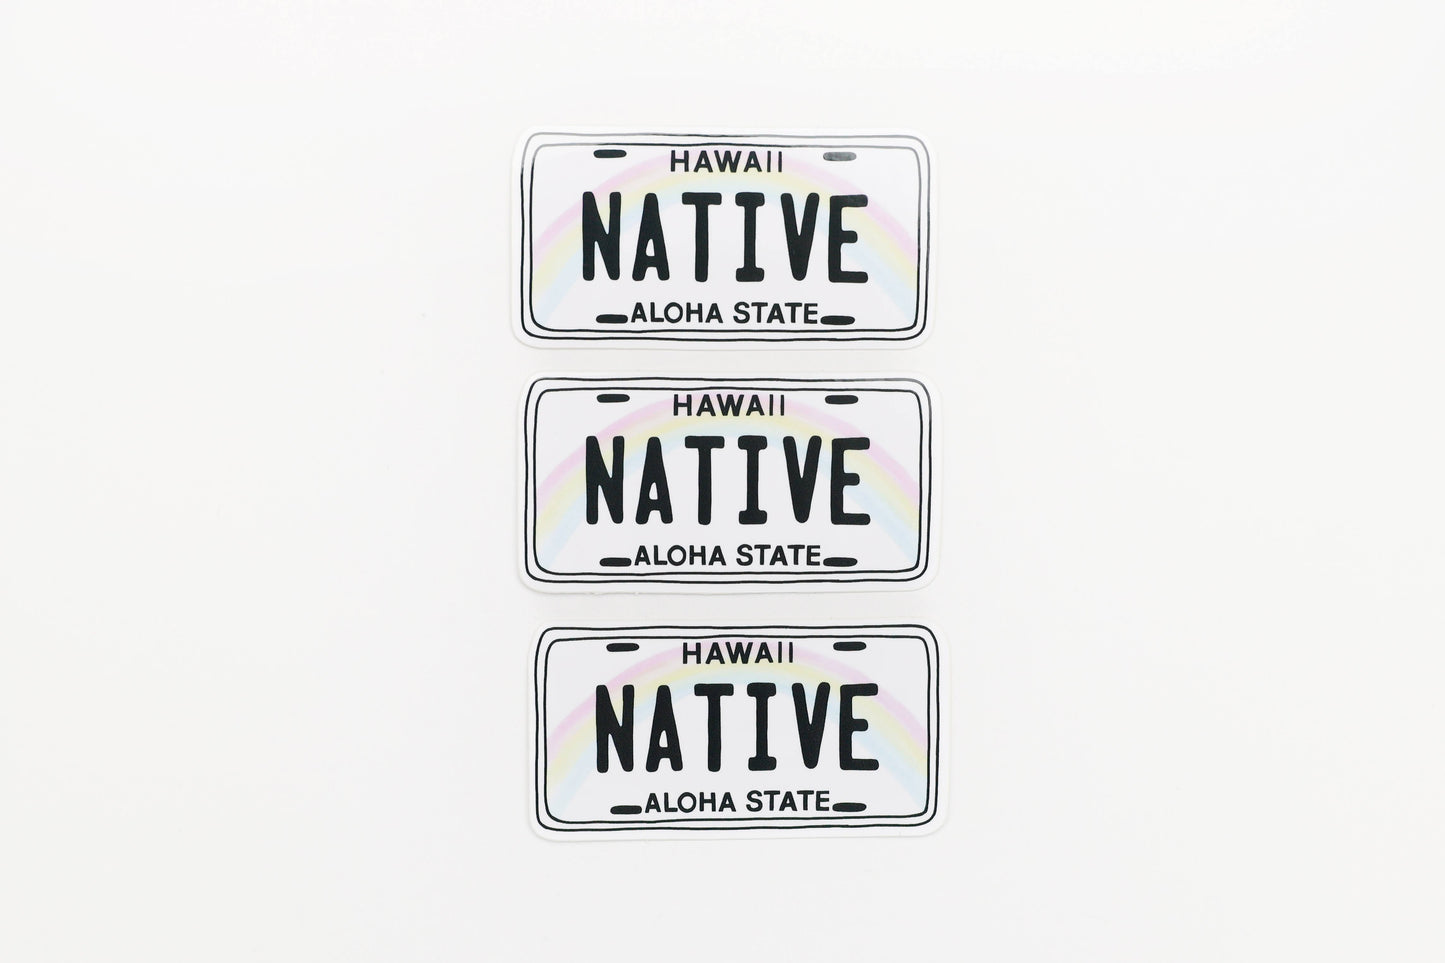 Hawaii License Plate Sticker